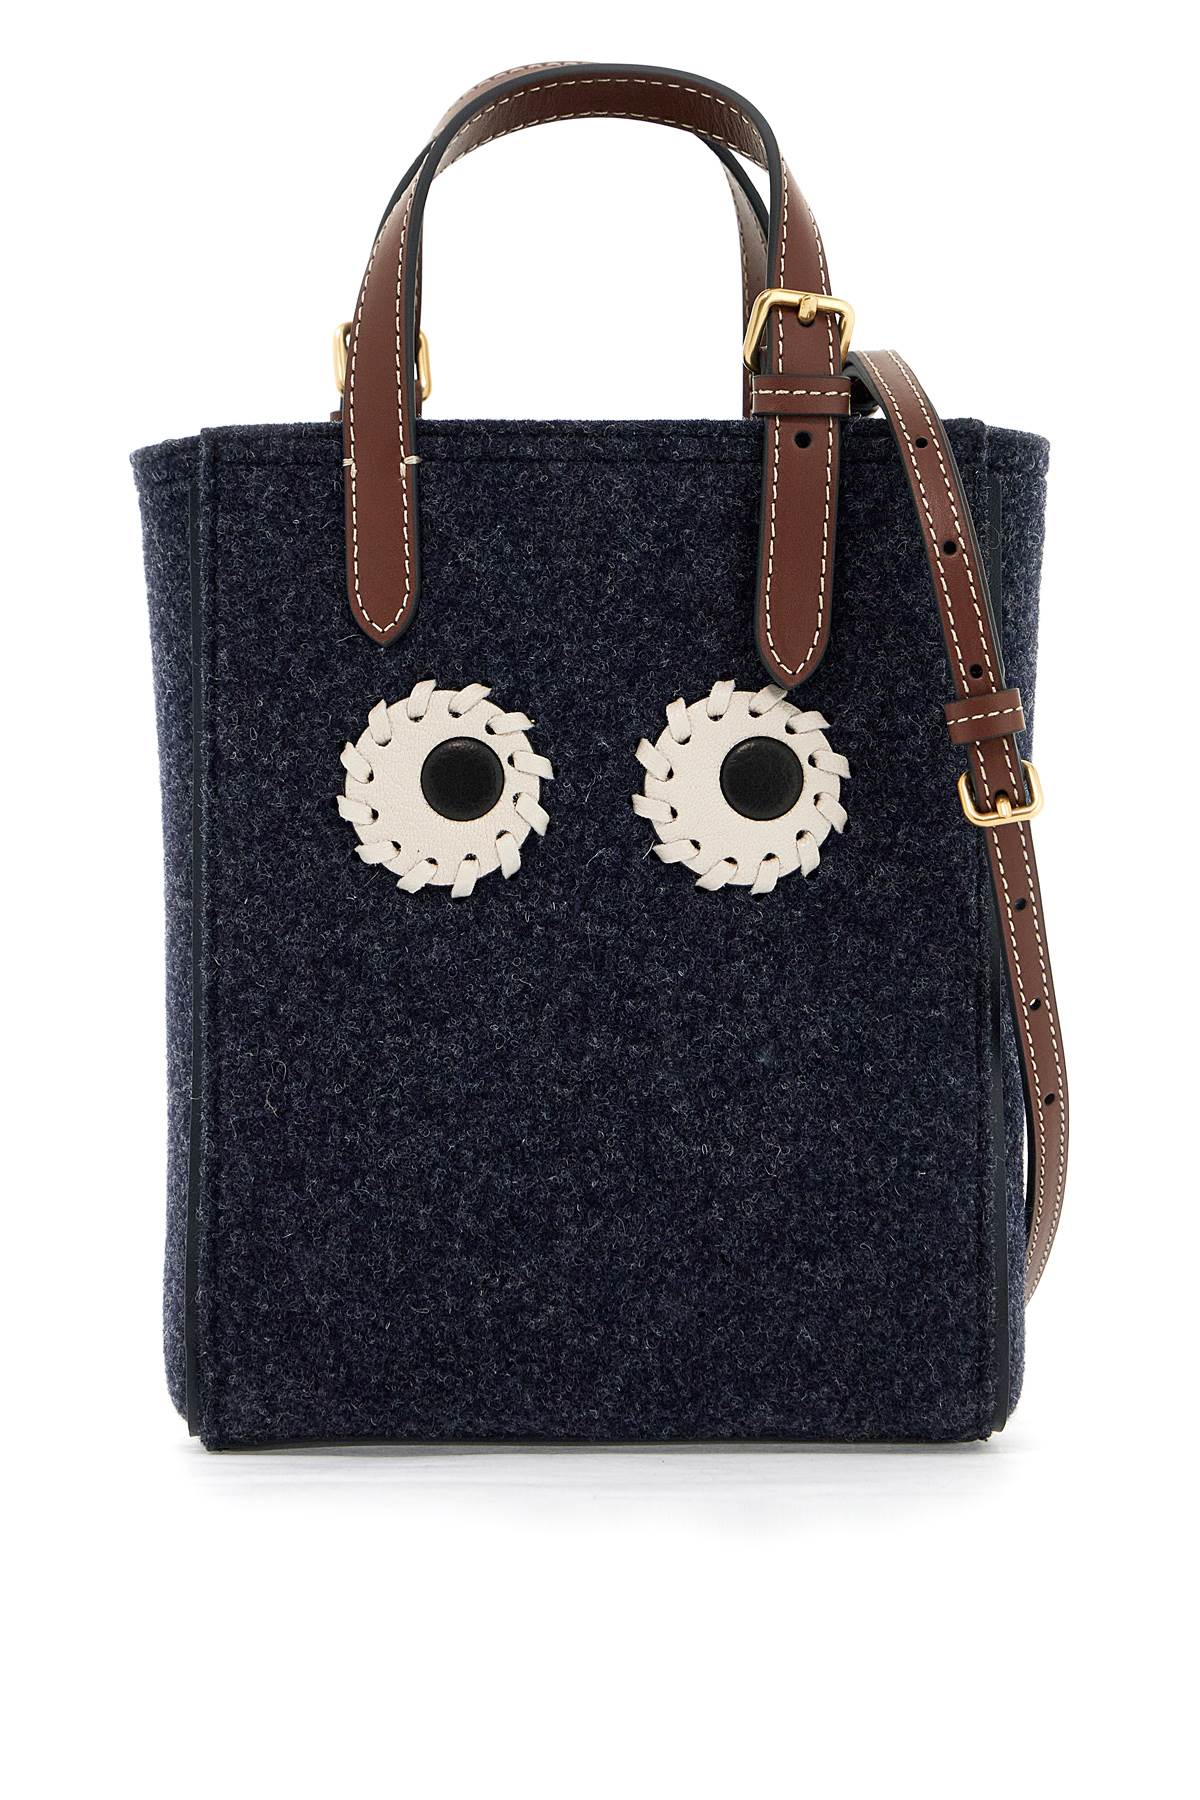 Anya Hindmarch ANYA HINDMARCH mini felt tote bag with eyes design